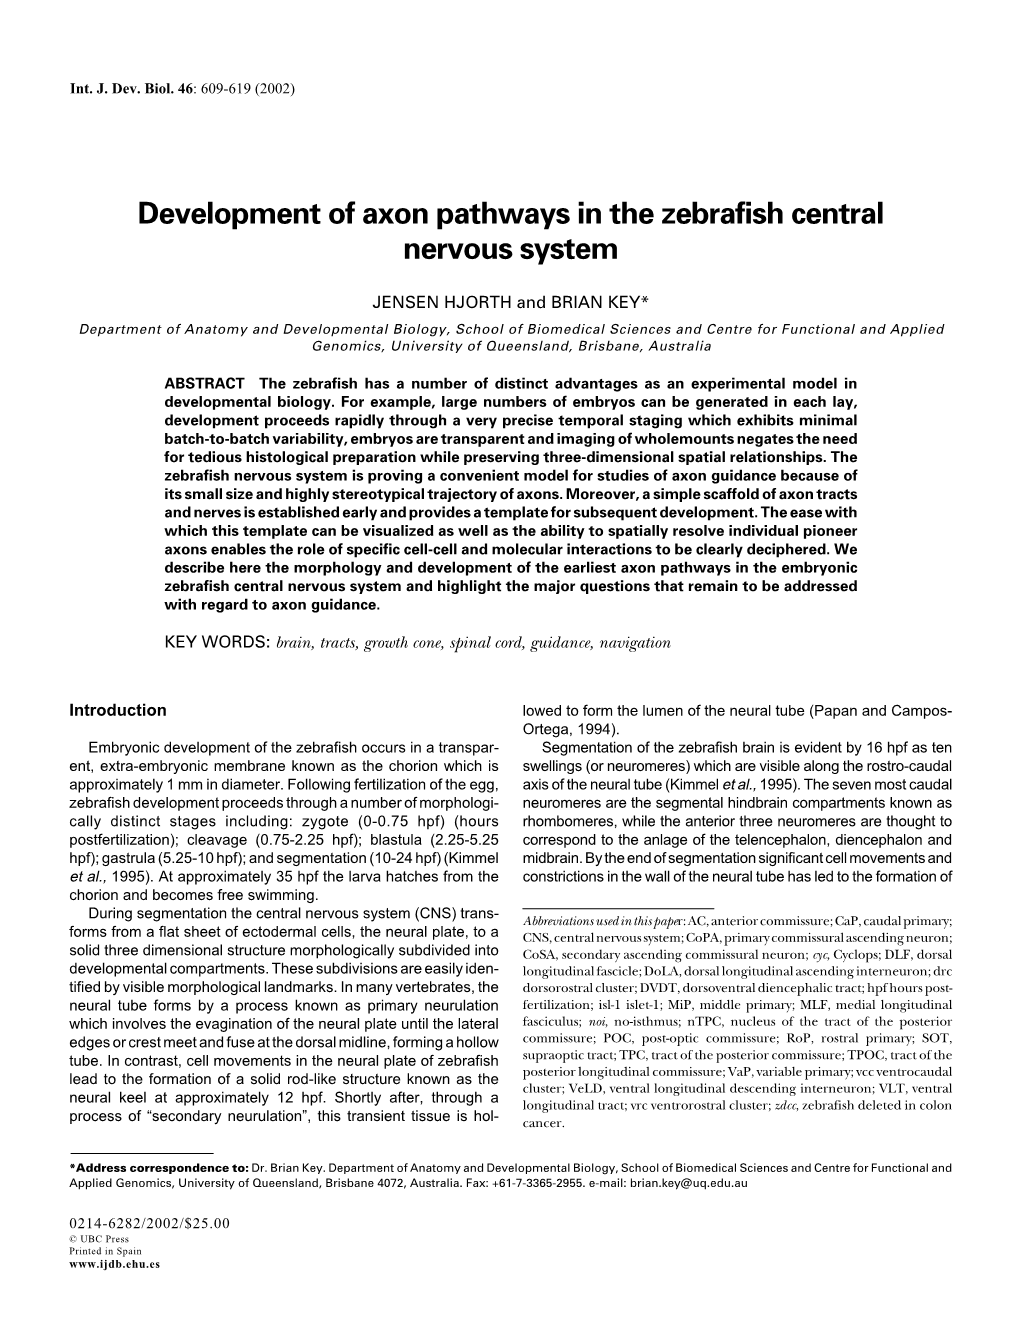 Development of Axon Pathways in the Zebrafish Central Nervous System